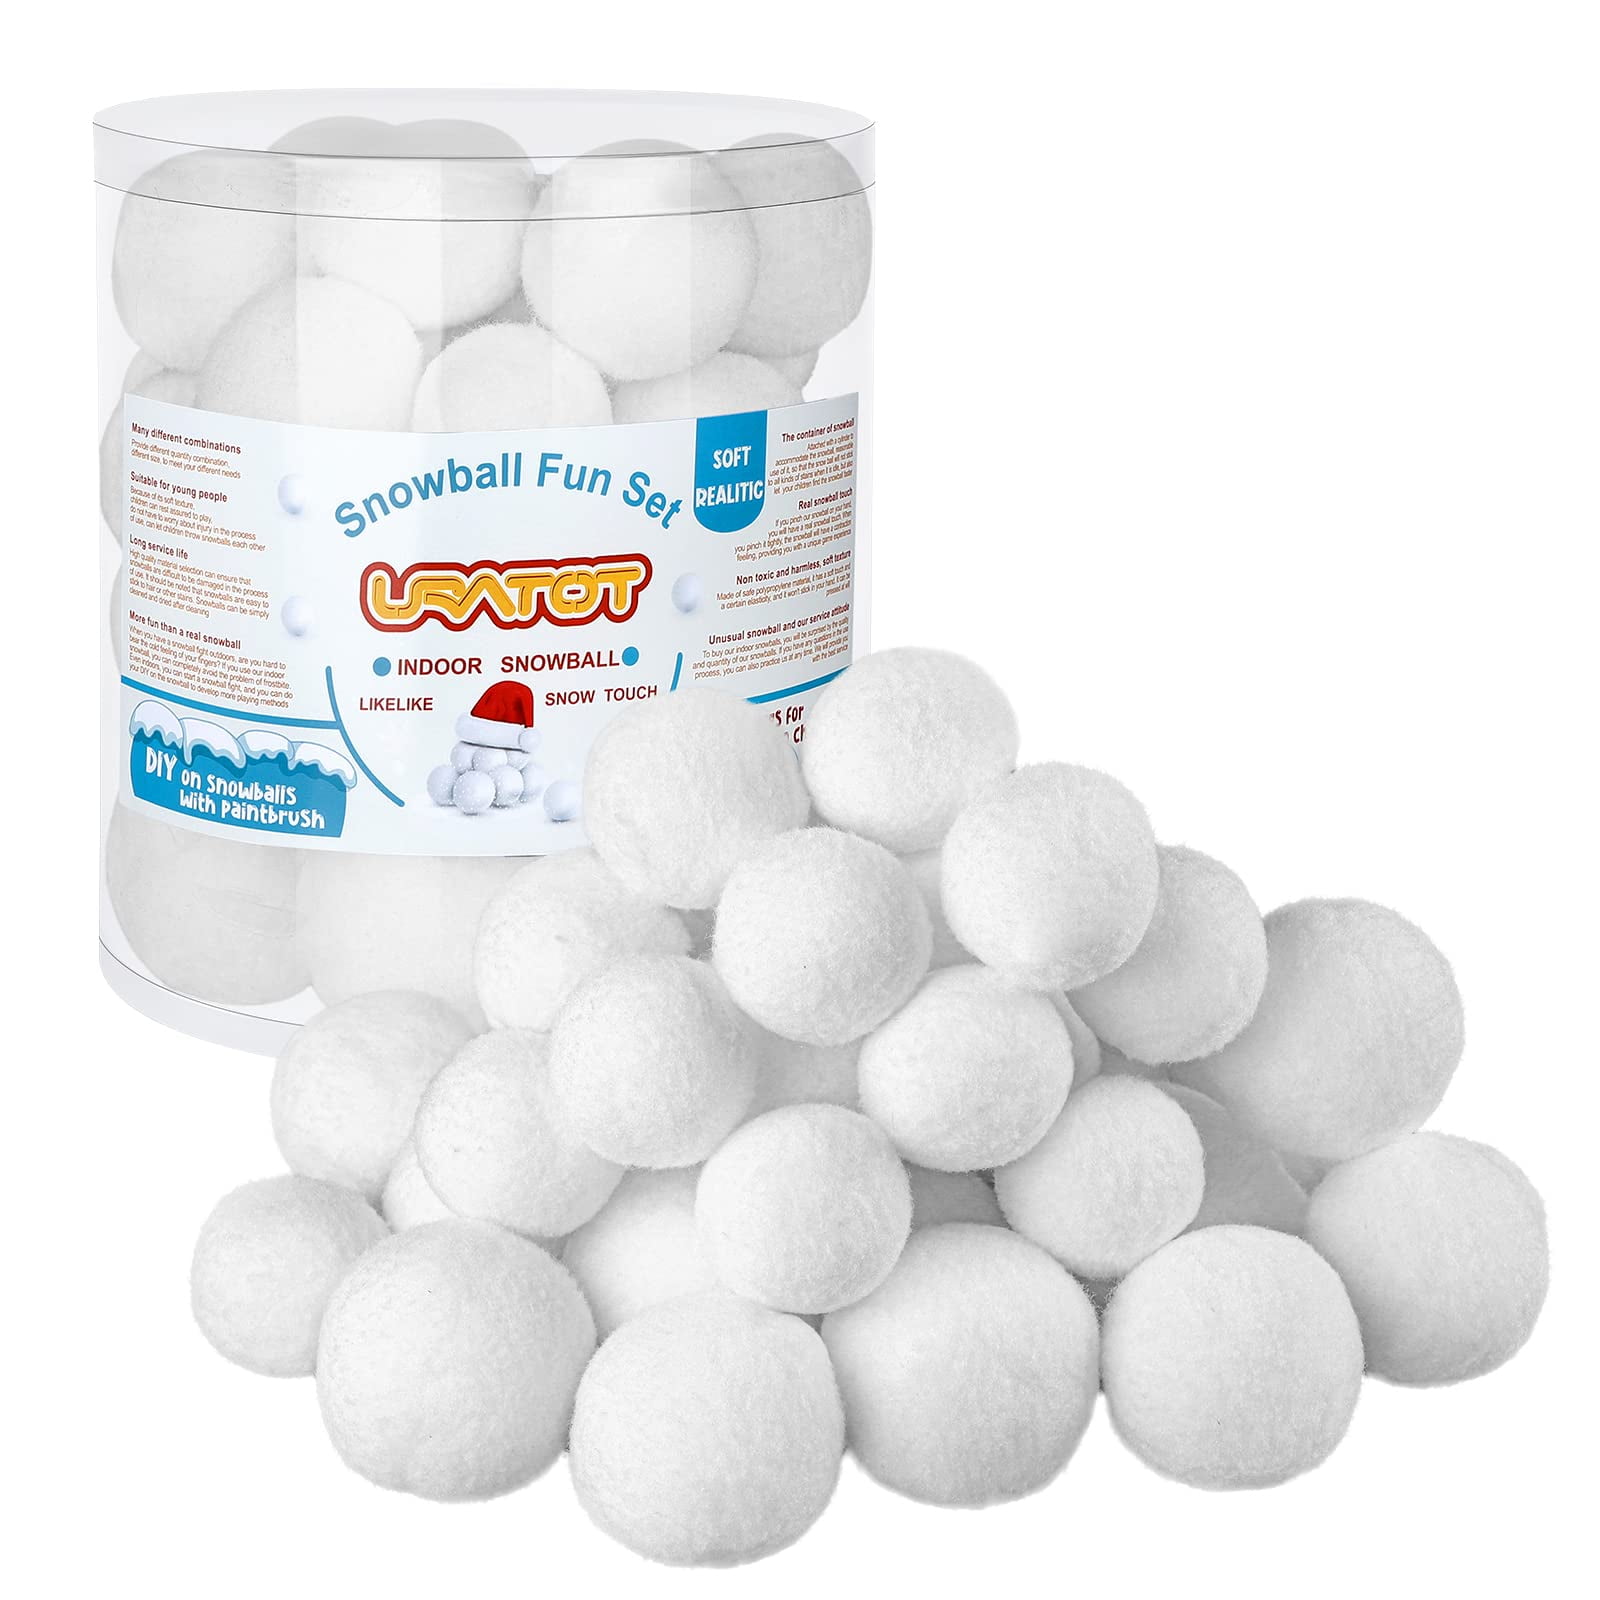 Squishy Fake Snowballs For Fun Indoor Fight - Inspire Uplift